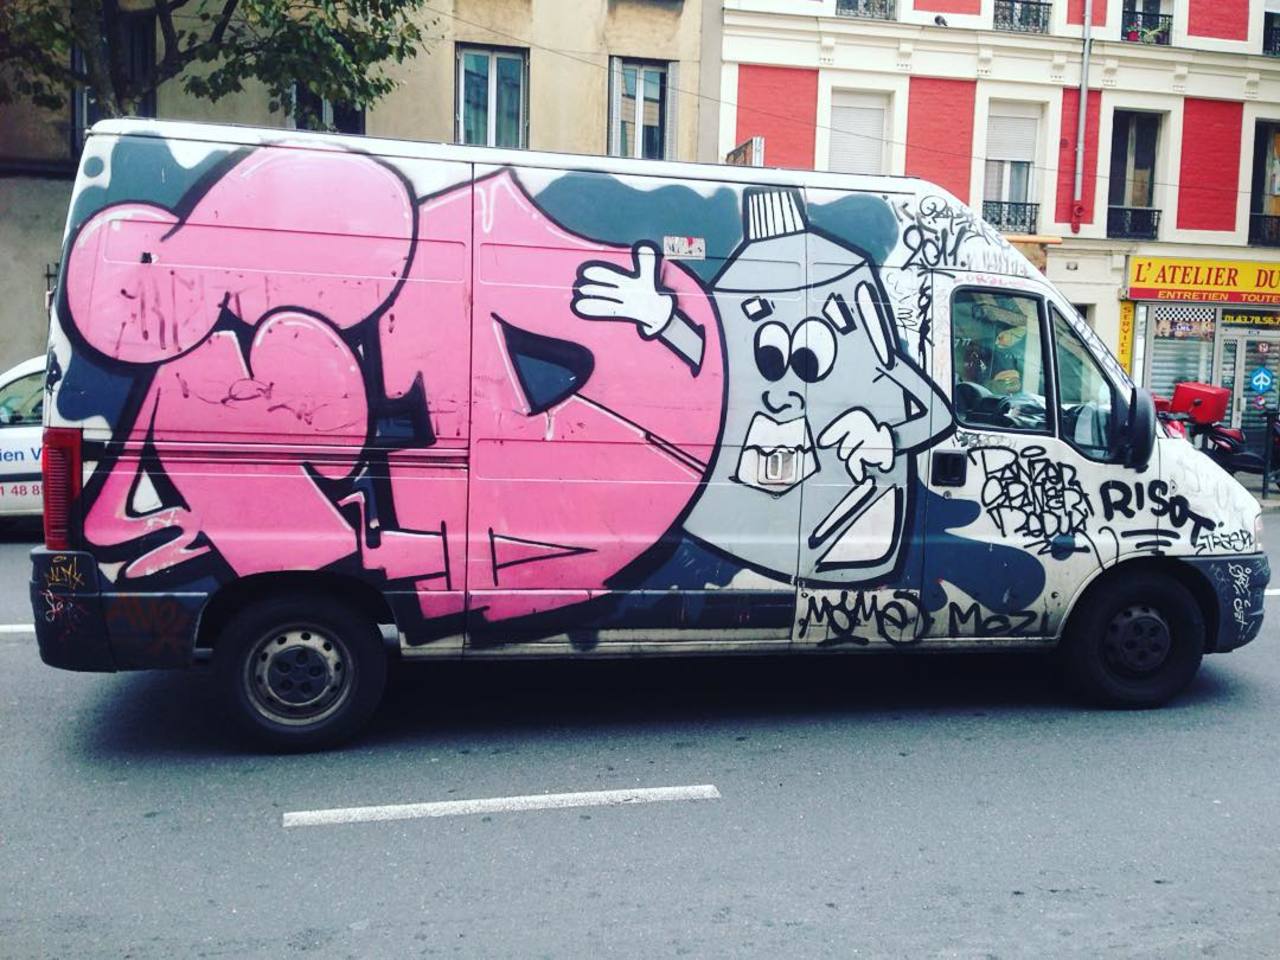 #Paris #graffiti photo by @cibti4987 http://ift.tt/1M5aVwN #StreetArt https://t.co/XGSVGZ6nNU